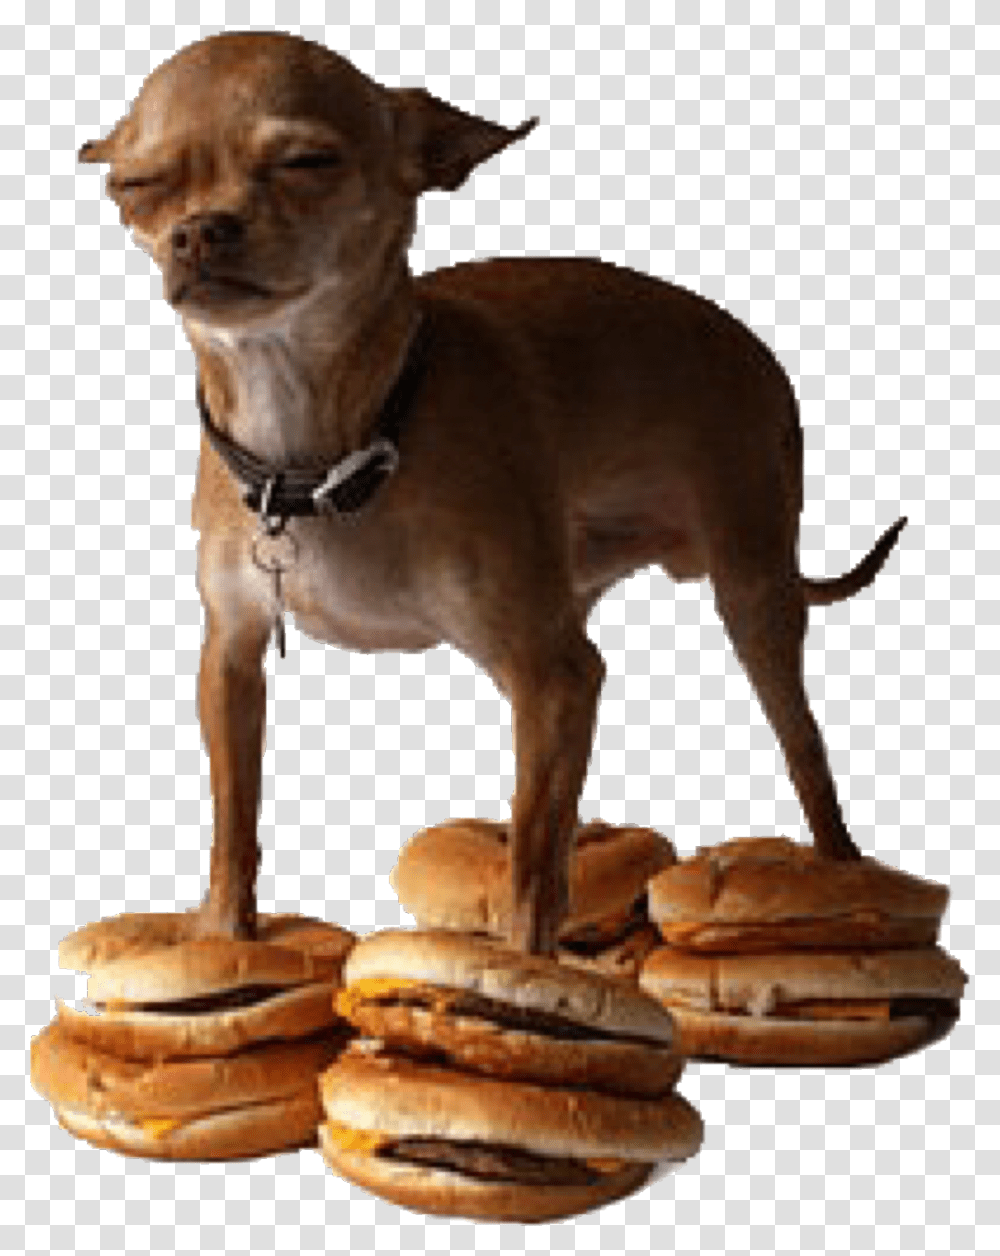 Dankmeme Dankmemes Memes Meme Dank Chiuhauha Dog On Hamburger Meme, Bread, Food, Bakery, Shop Transparent Png